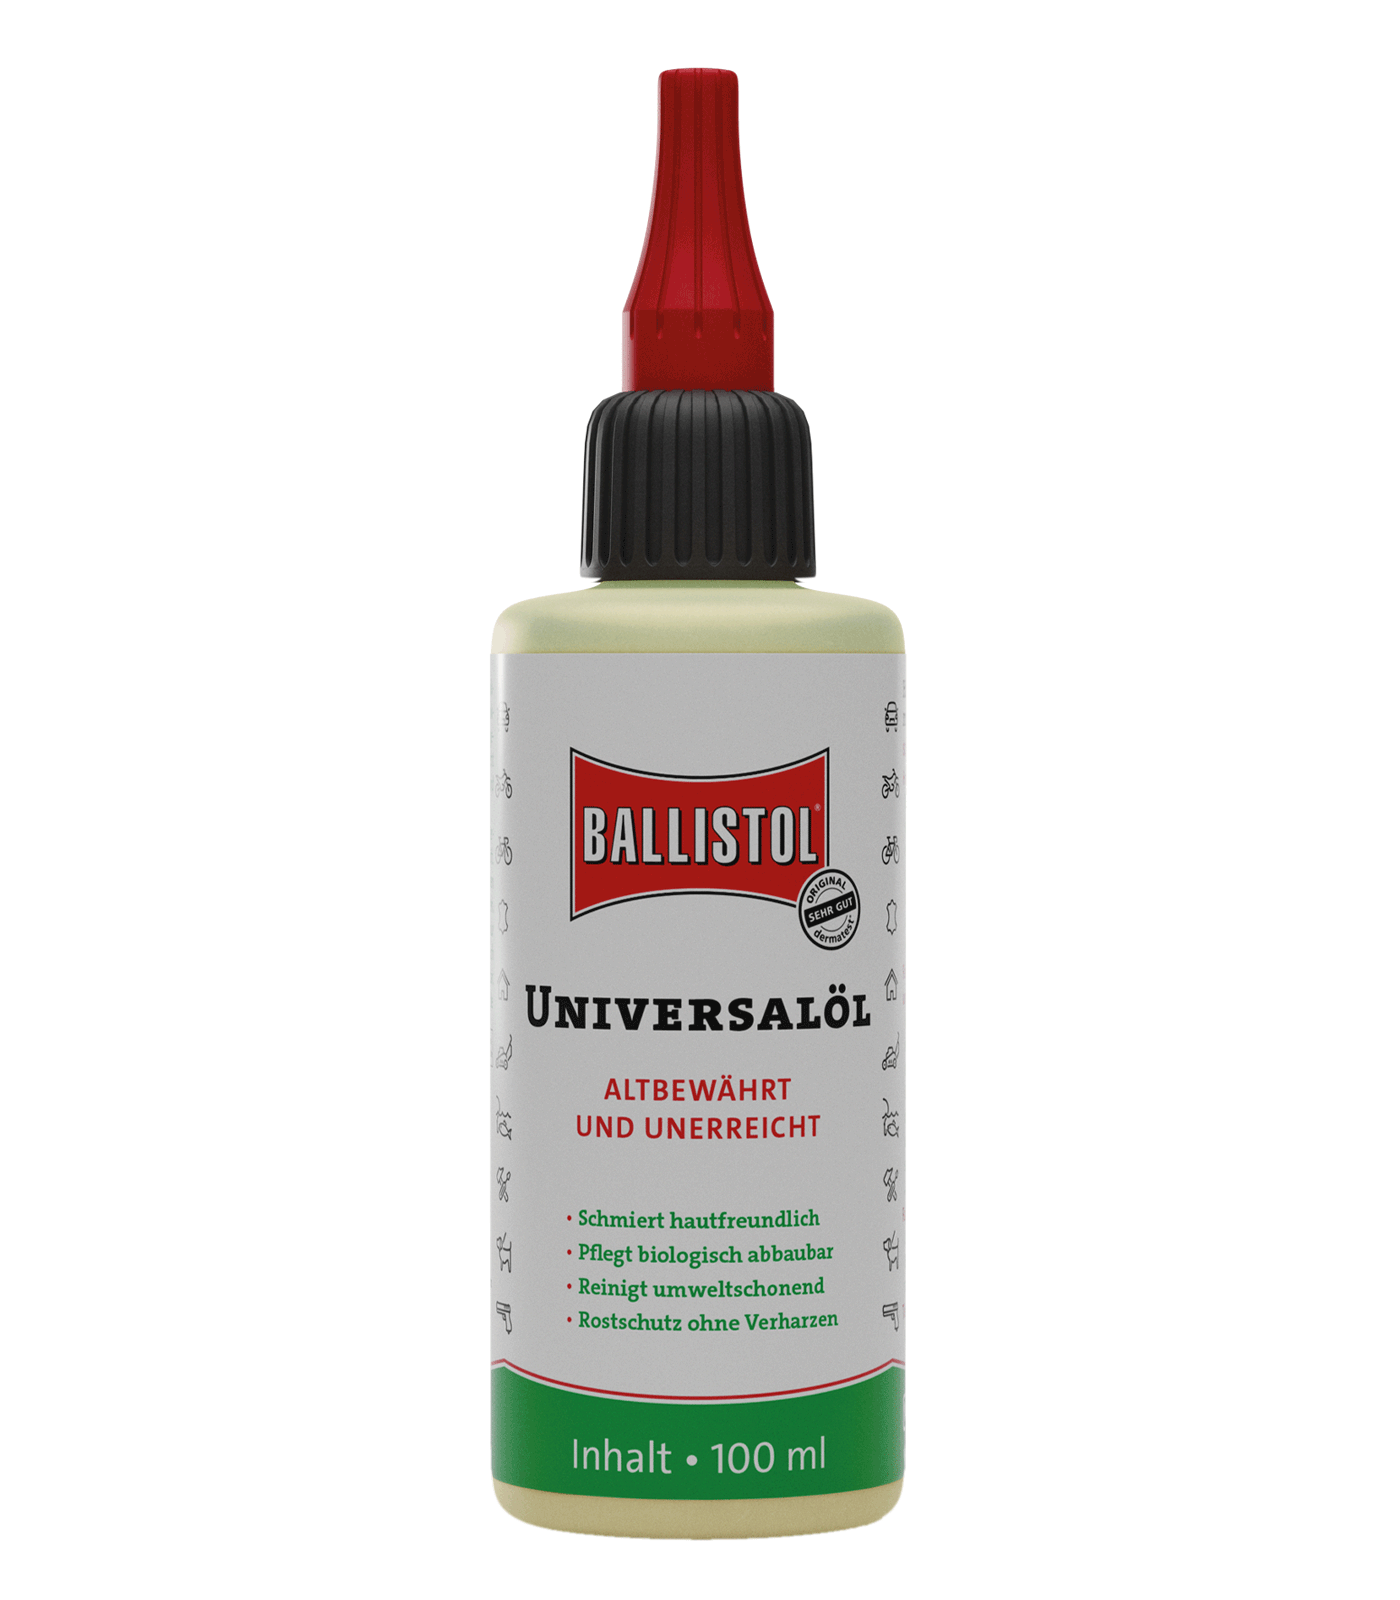 Ballistol universal oil with dosing tip, 100 ml